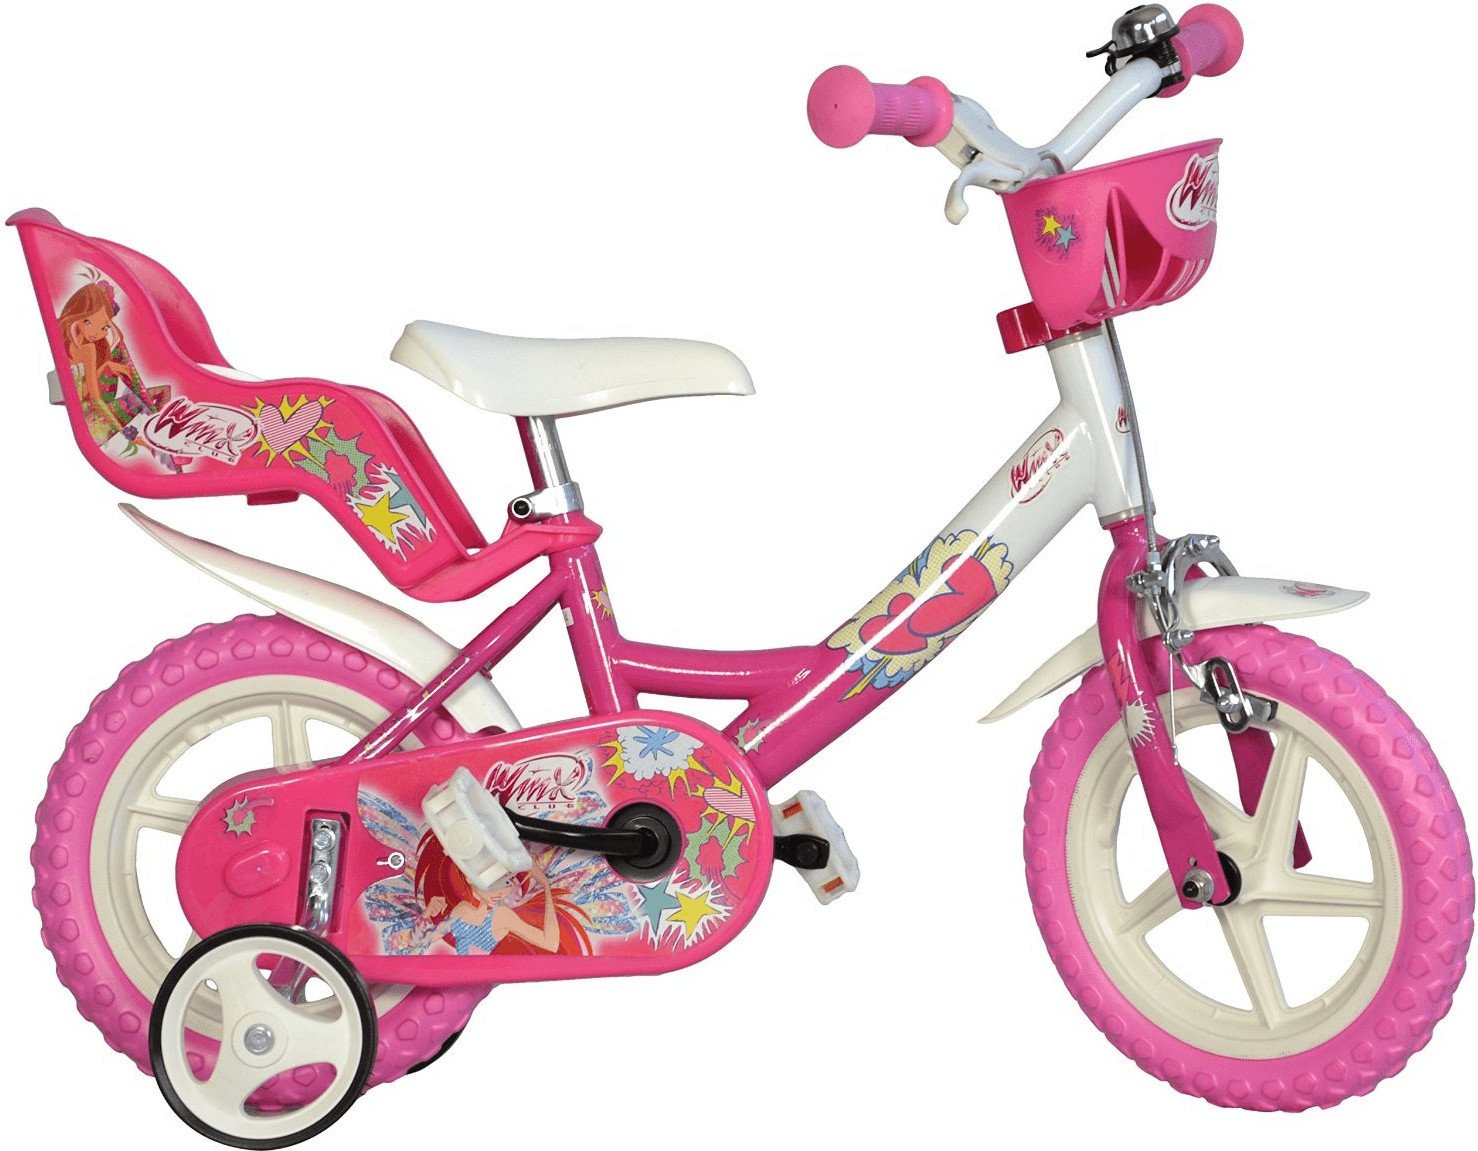 Dino Bikes 12 inch Kids Bike - Winx